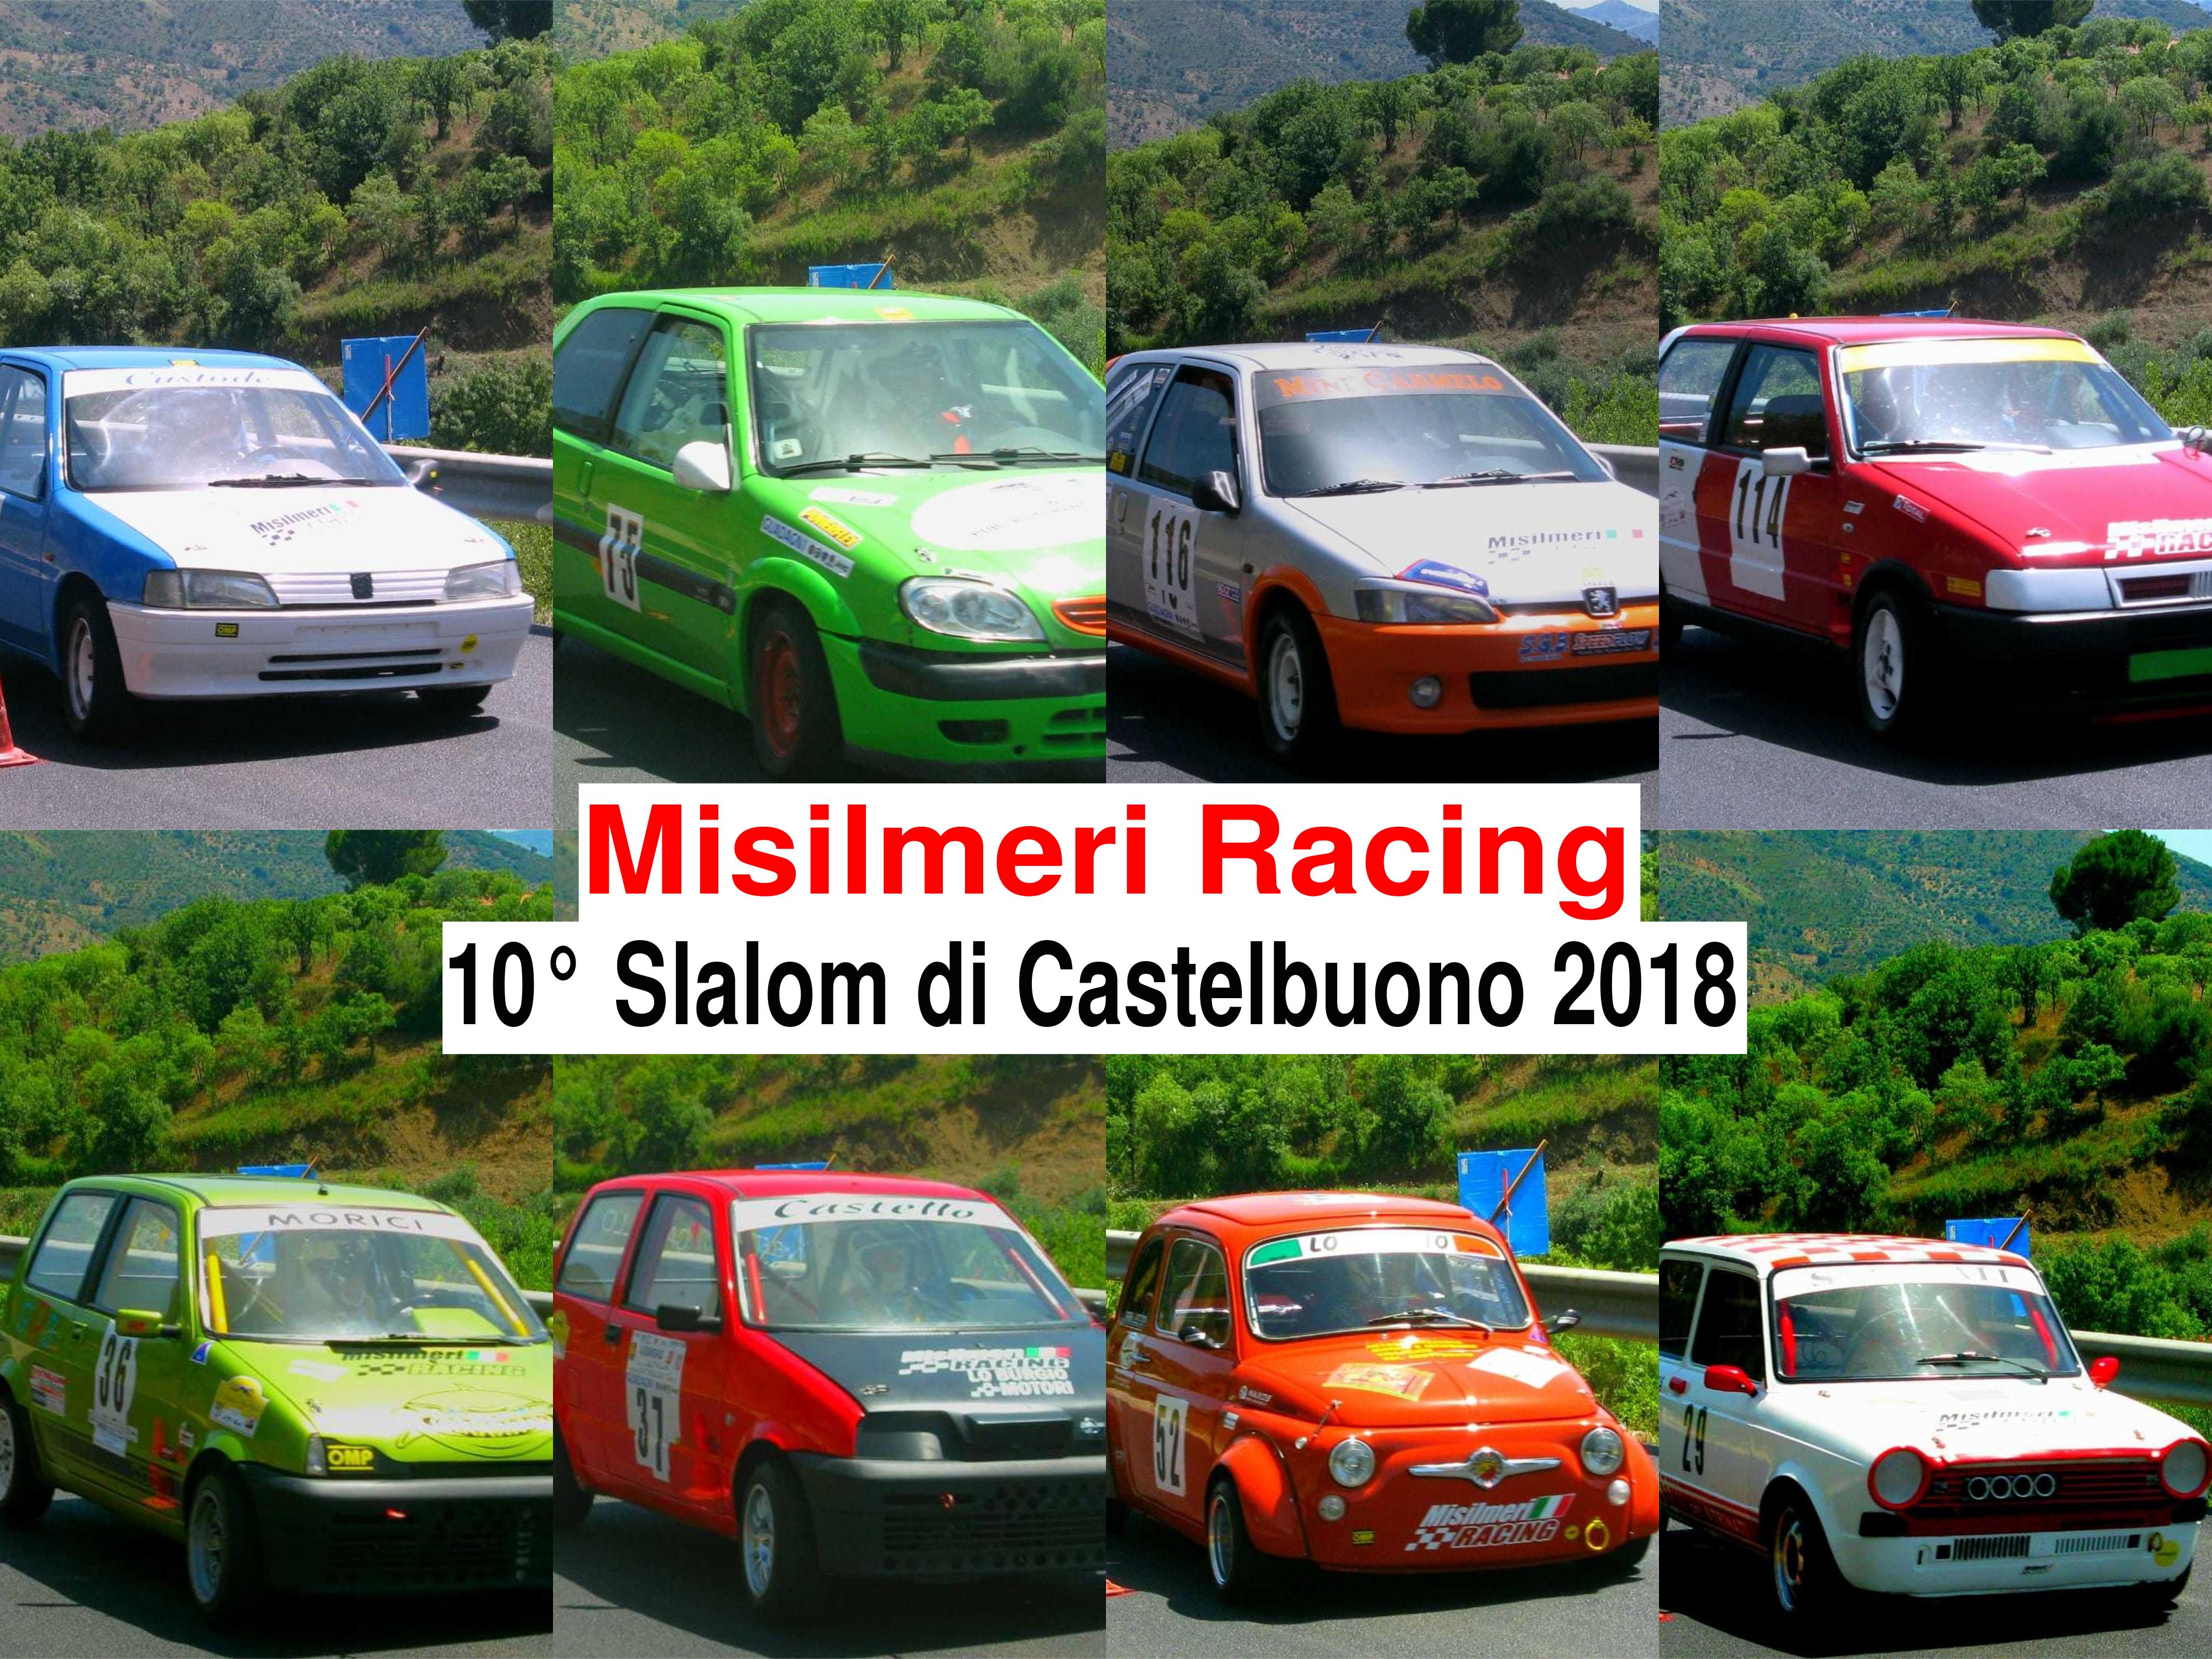 AutoSlalom, Misilmeri Racing presente a Castelbuono